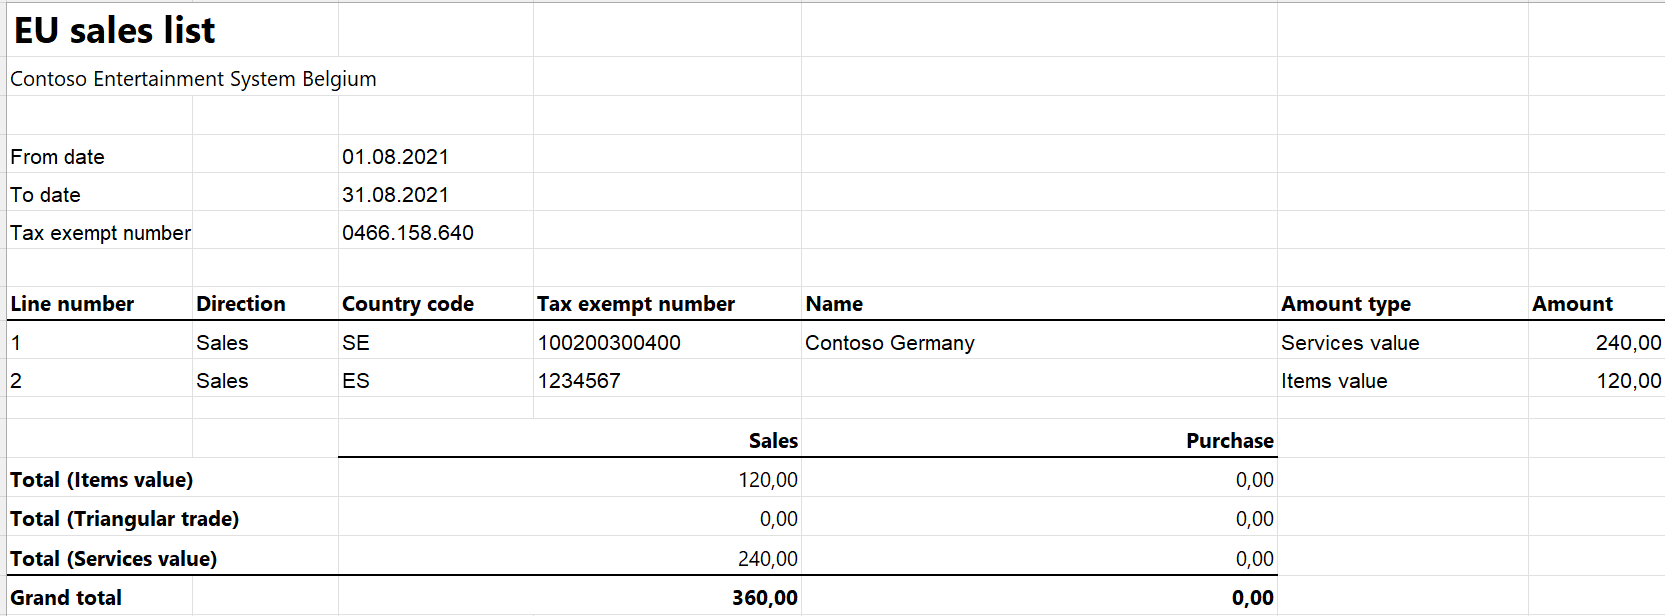 Generated EUSL report in Excel.